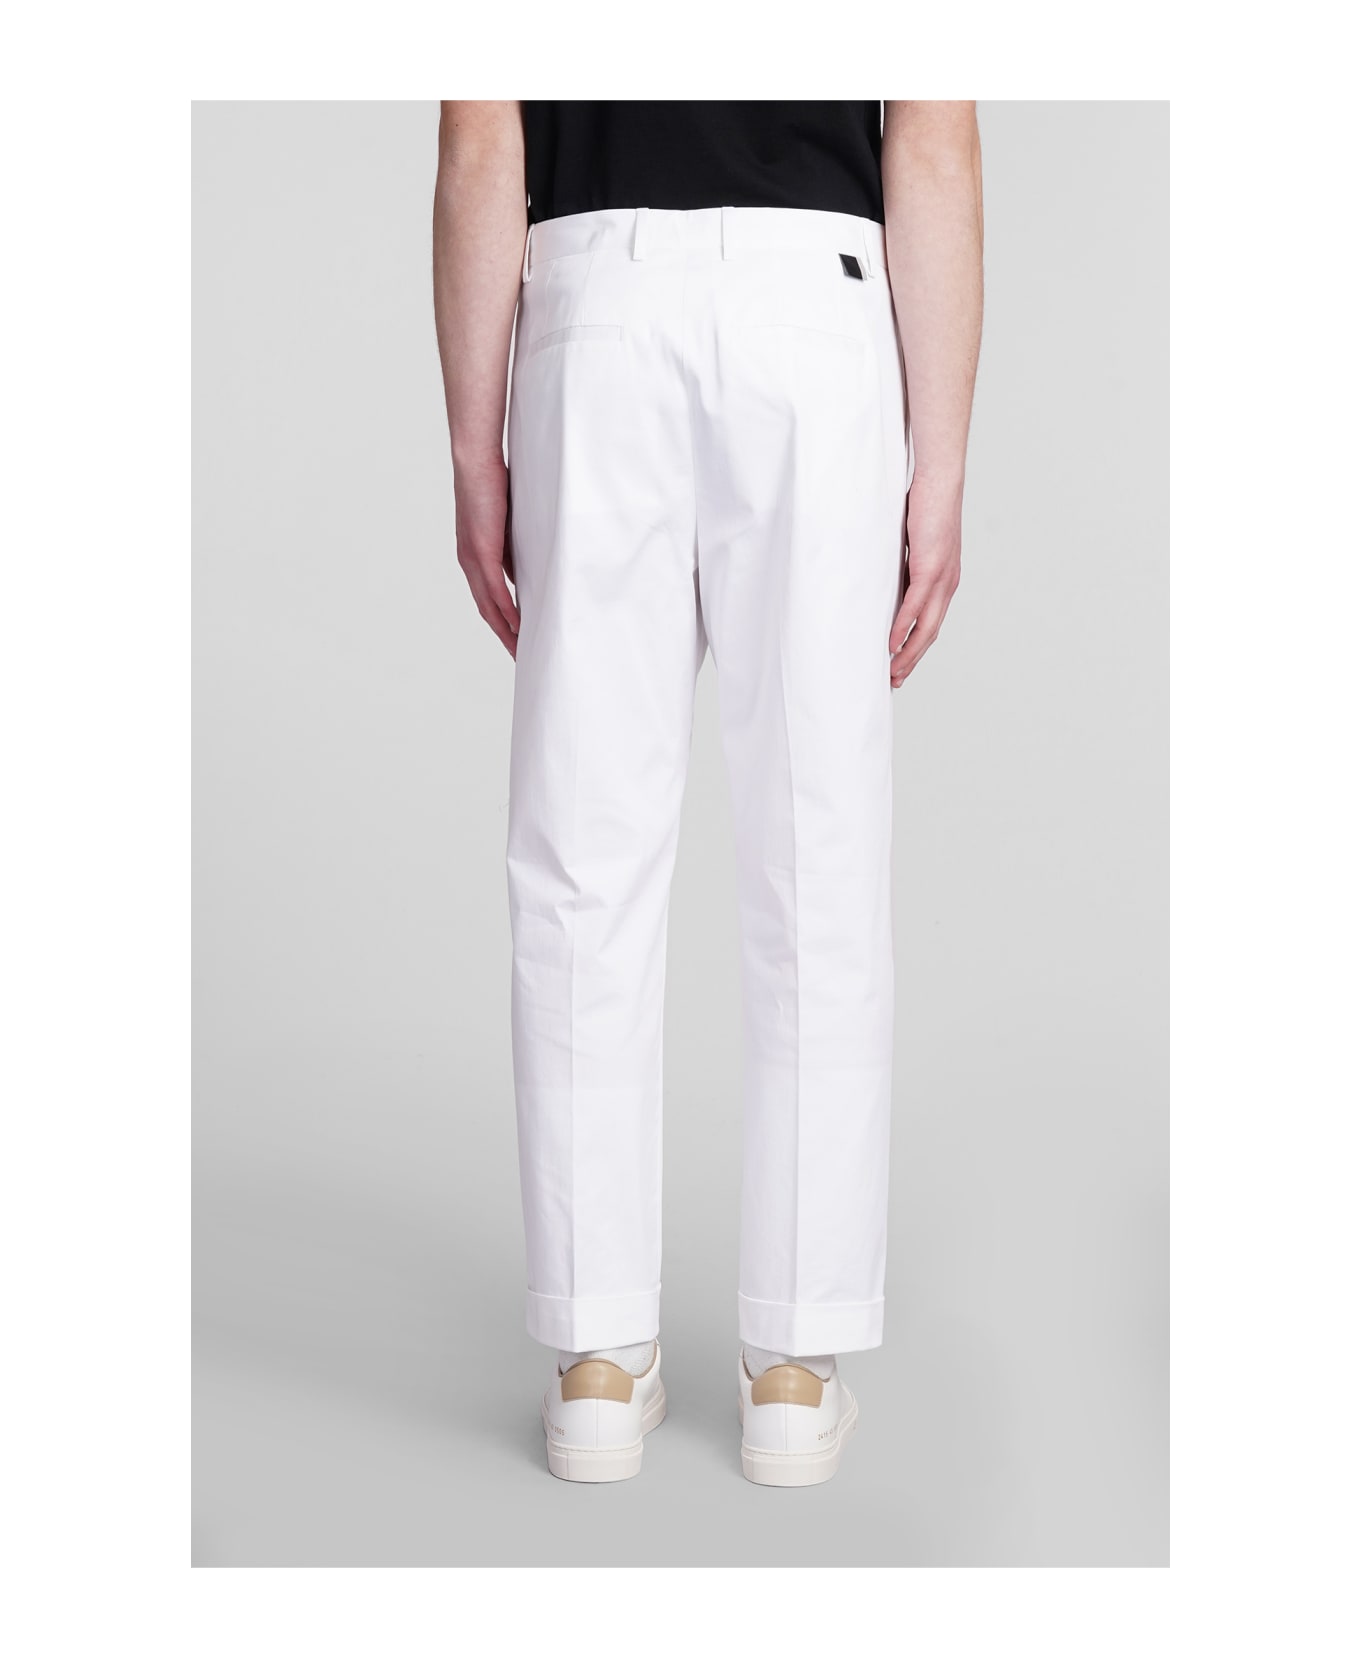 Low Brand Kim Pants In White Cotton - white ボトムス